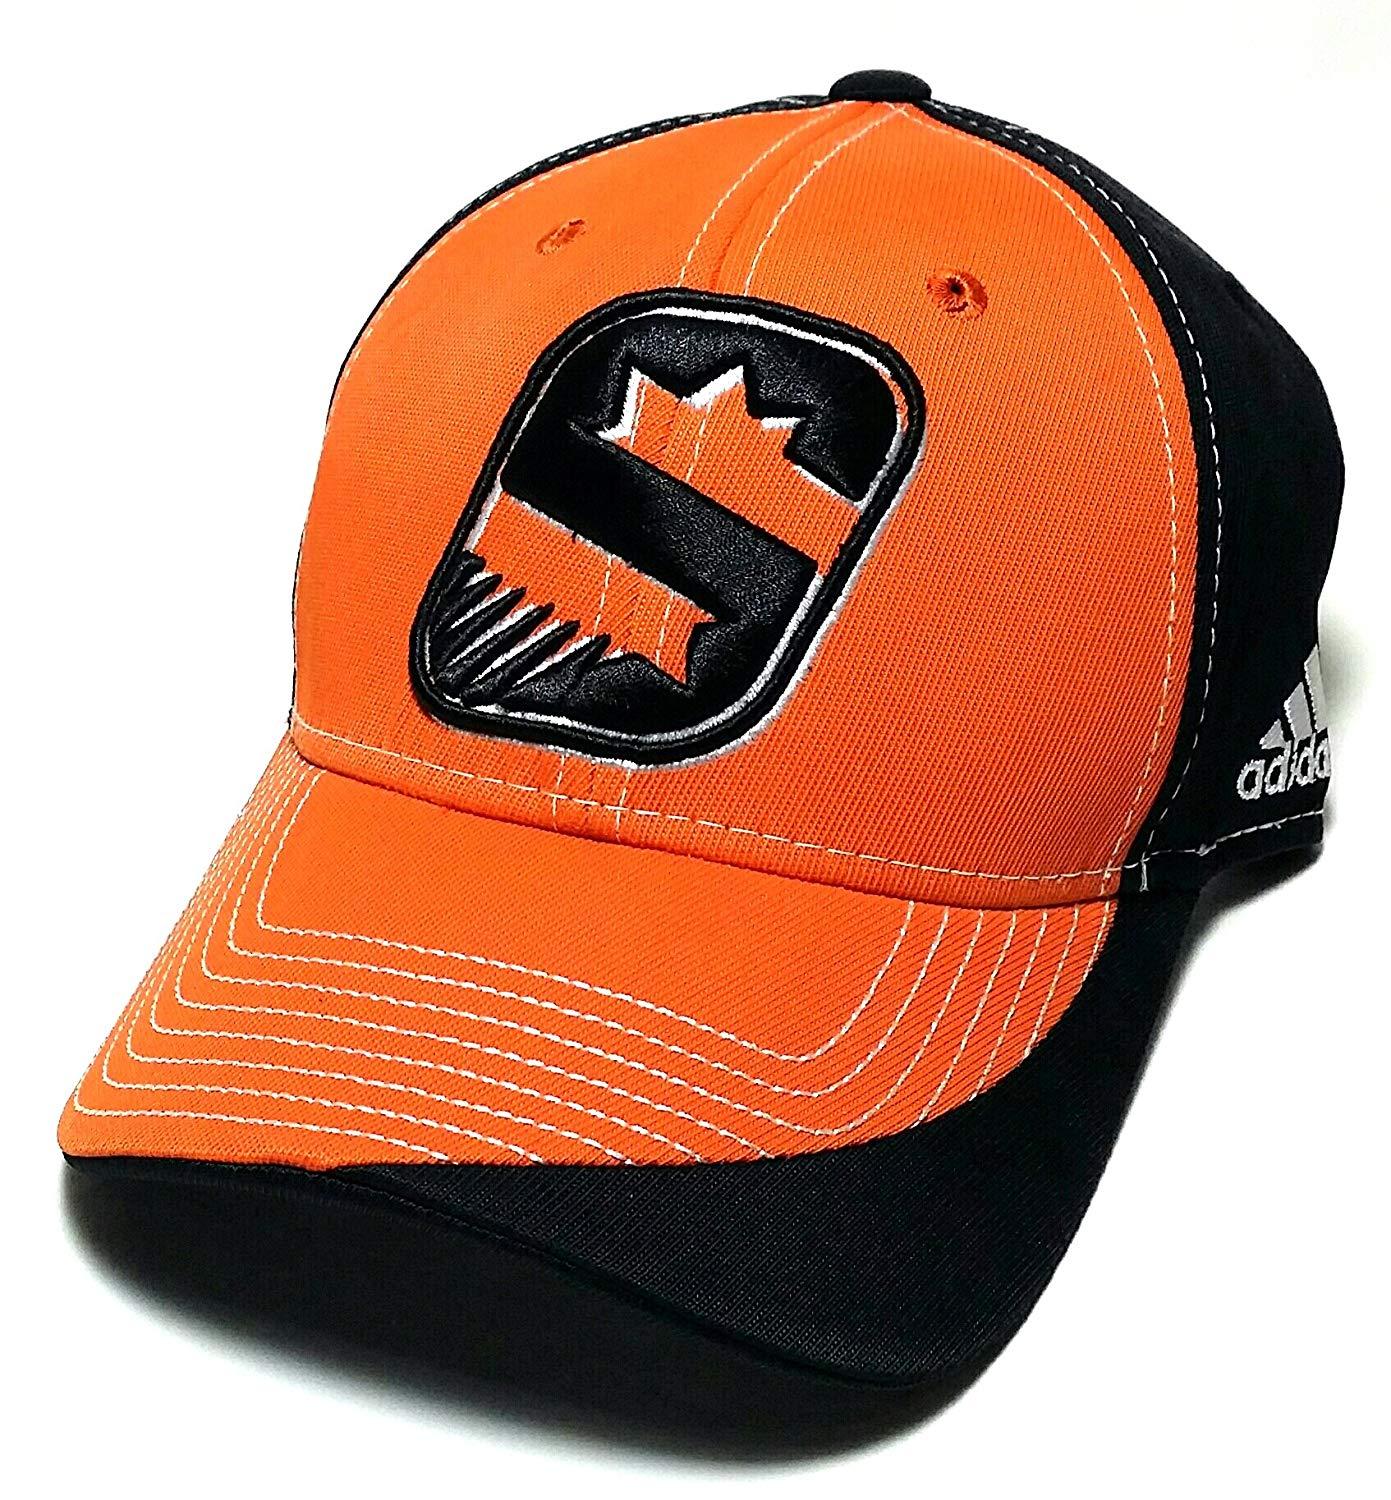 Orange Adidas Logo - Amazon.com : Phoenix Suns PHX NBA Adidas Alternate 3rd Logo Black